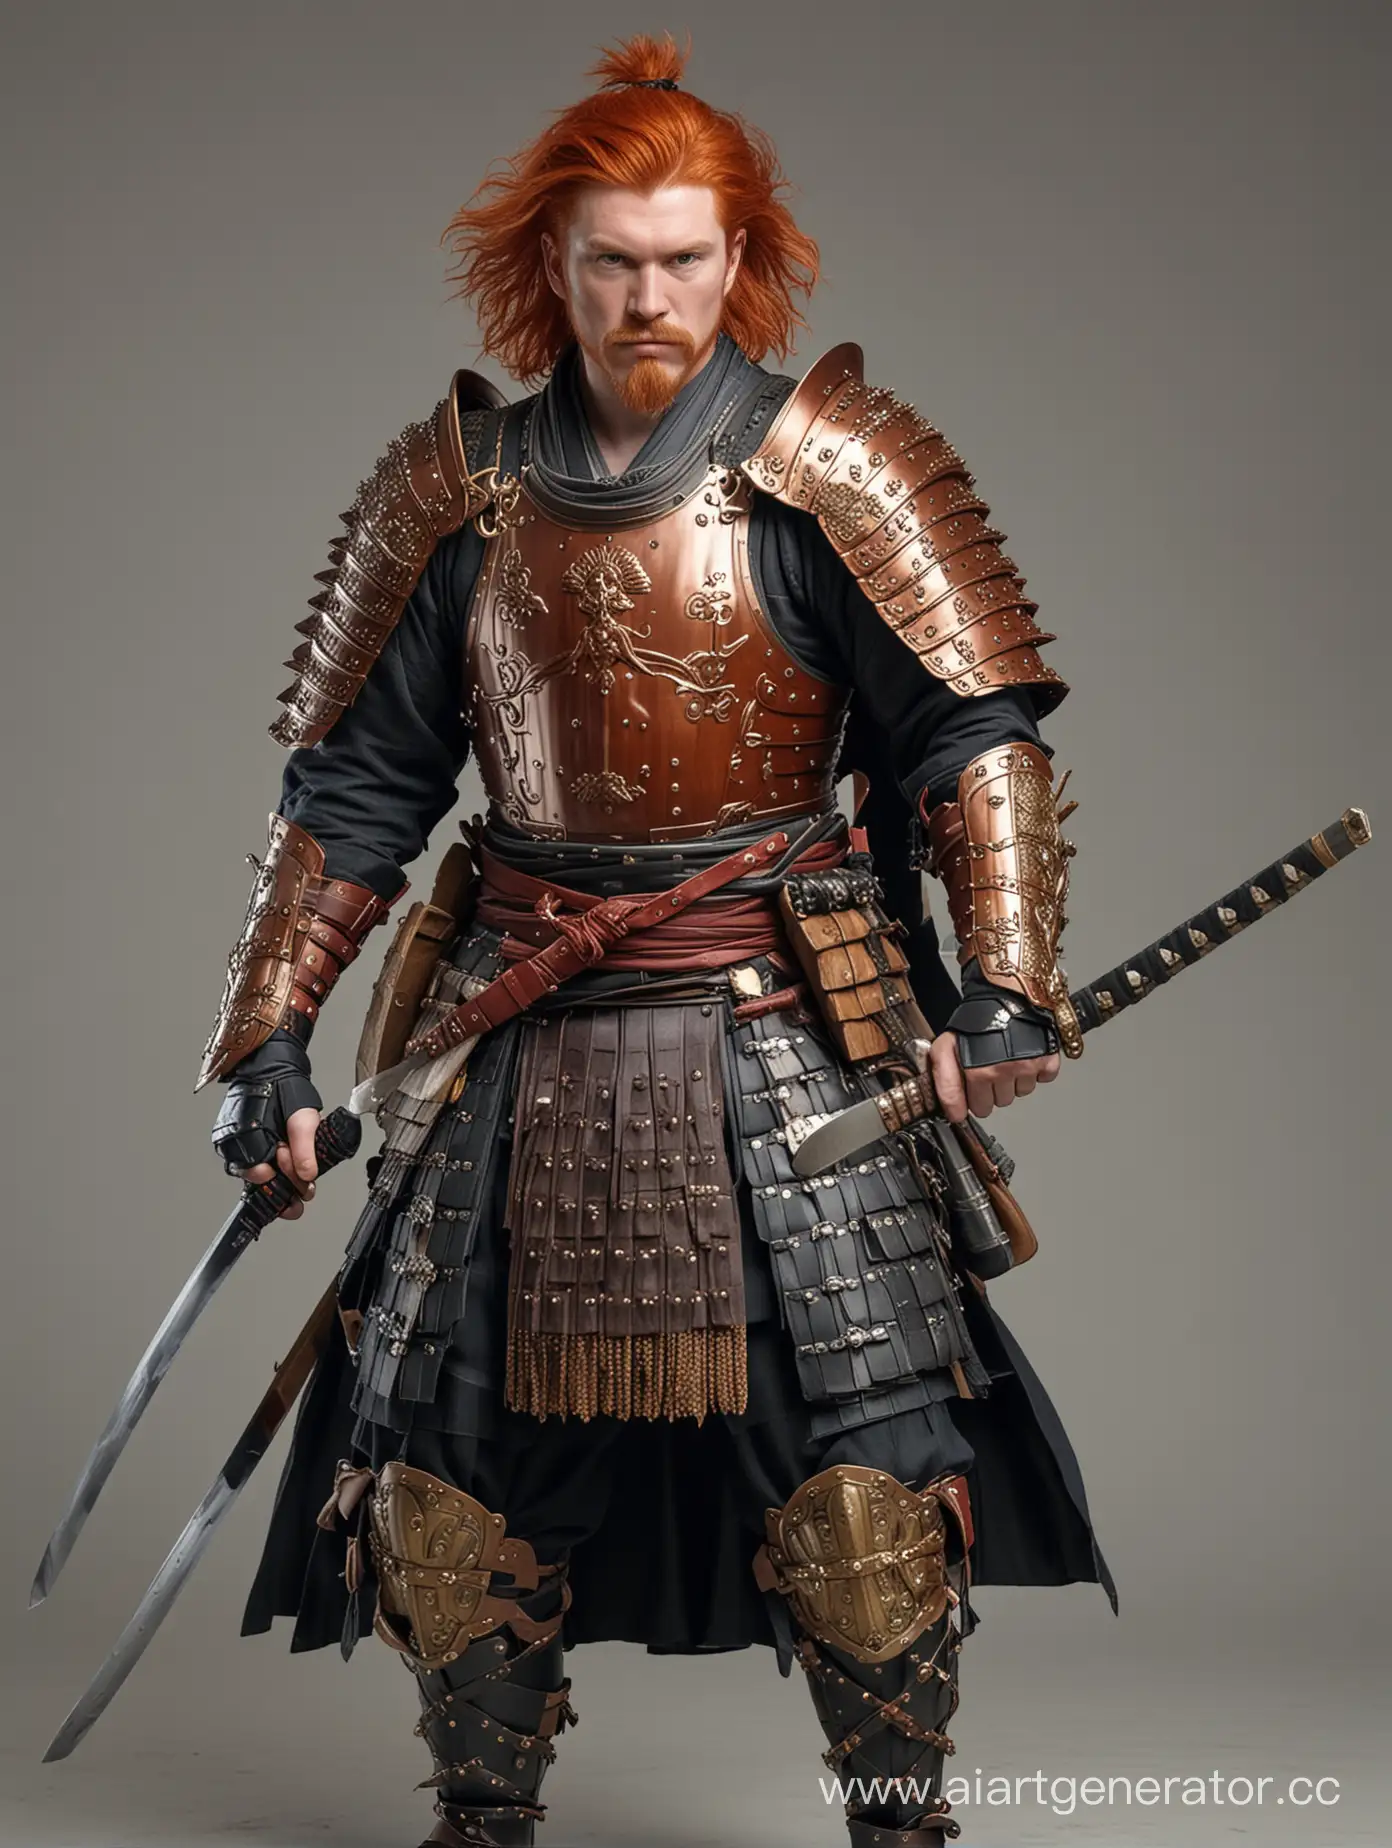 Scottish-Warrior-in-Japanese-Daimyo-Armor-with-Katana-and-Medieval-Swords